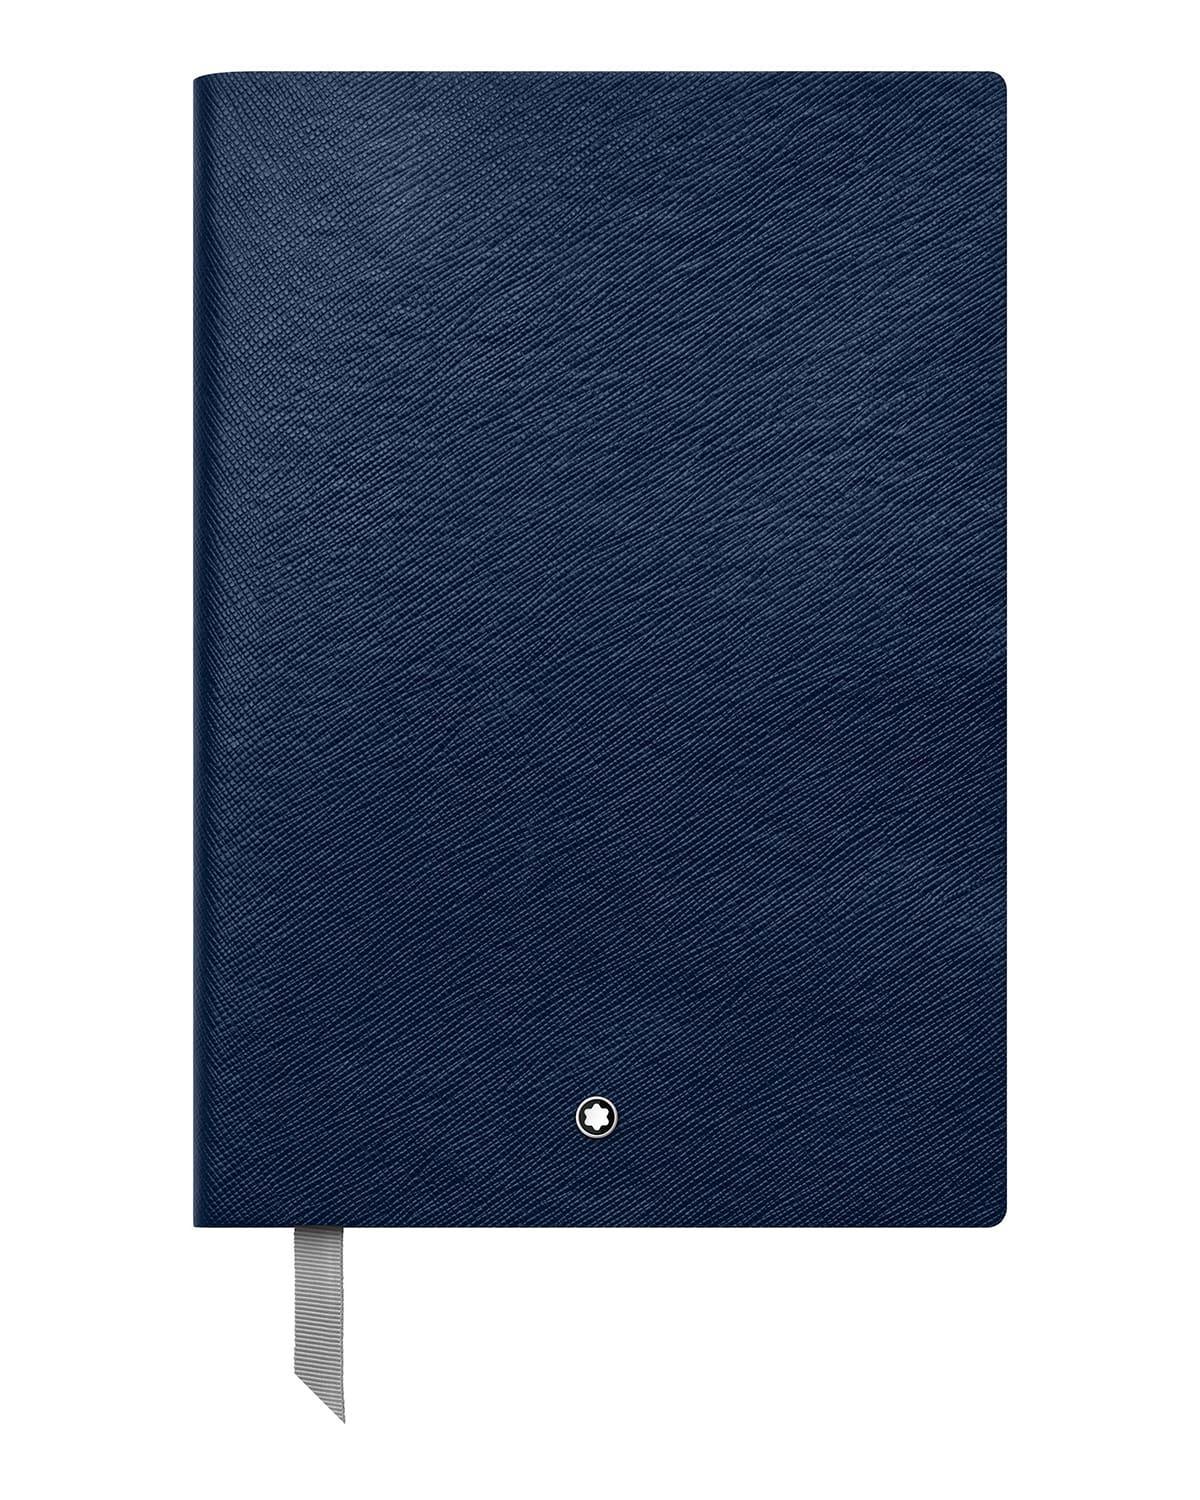 Montblanc Fine Stationary Leather Notebook #146, Indigo In Indigo Blue